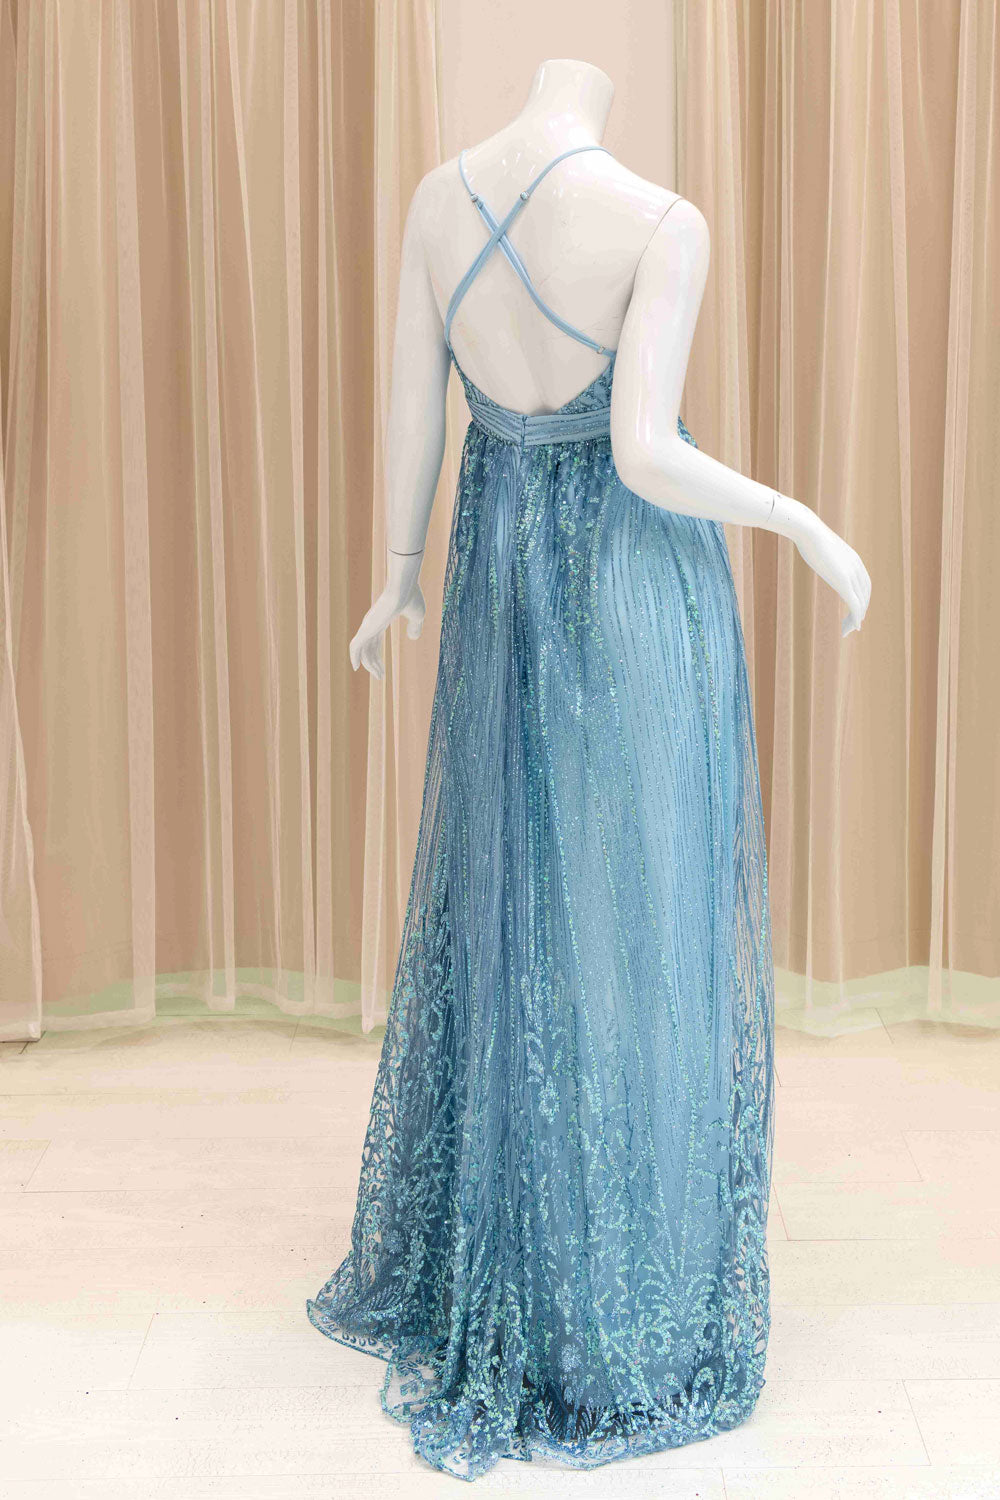 Aliah Marie Glitter Ball Gown in Light Blue